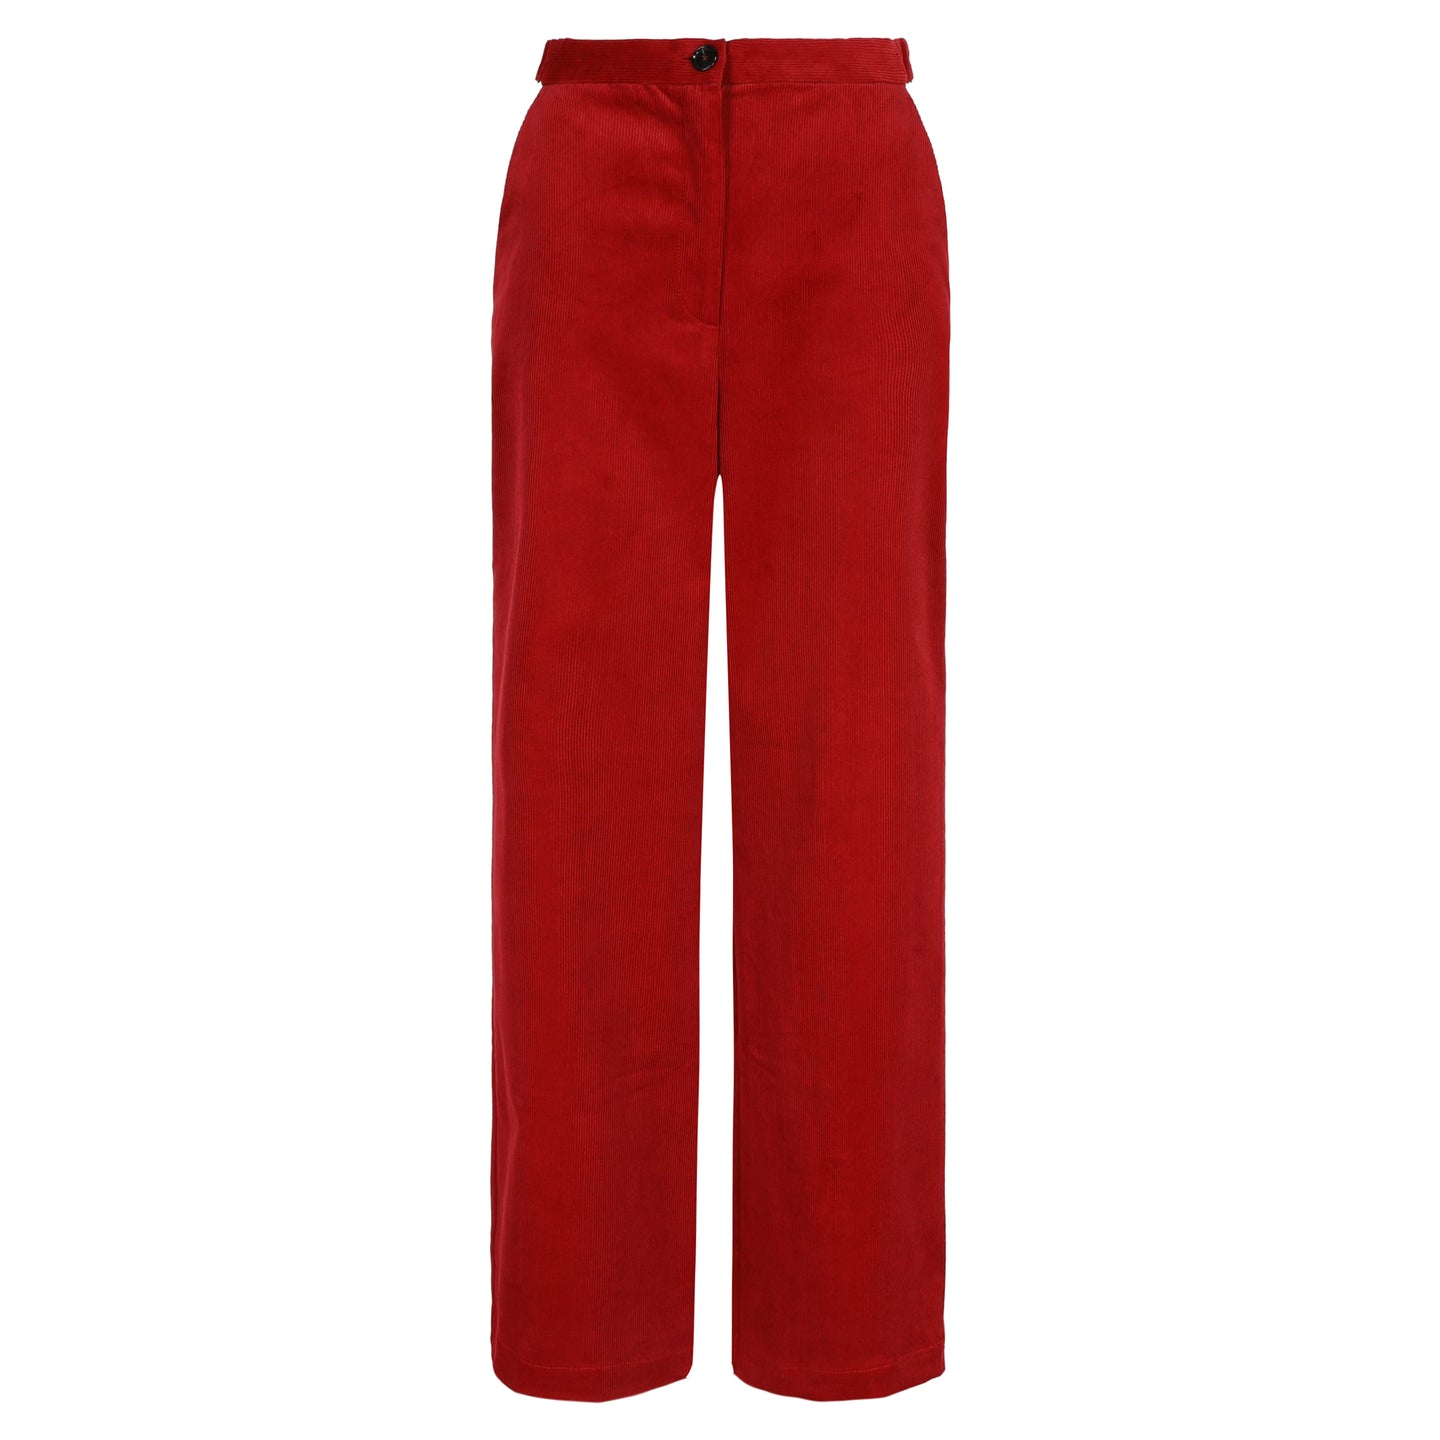 Gaia pants Corduroy red